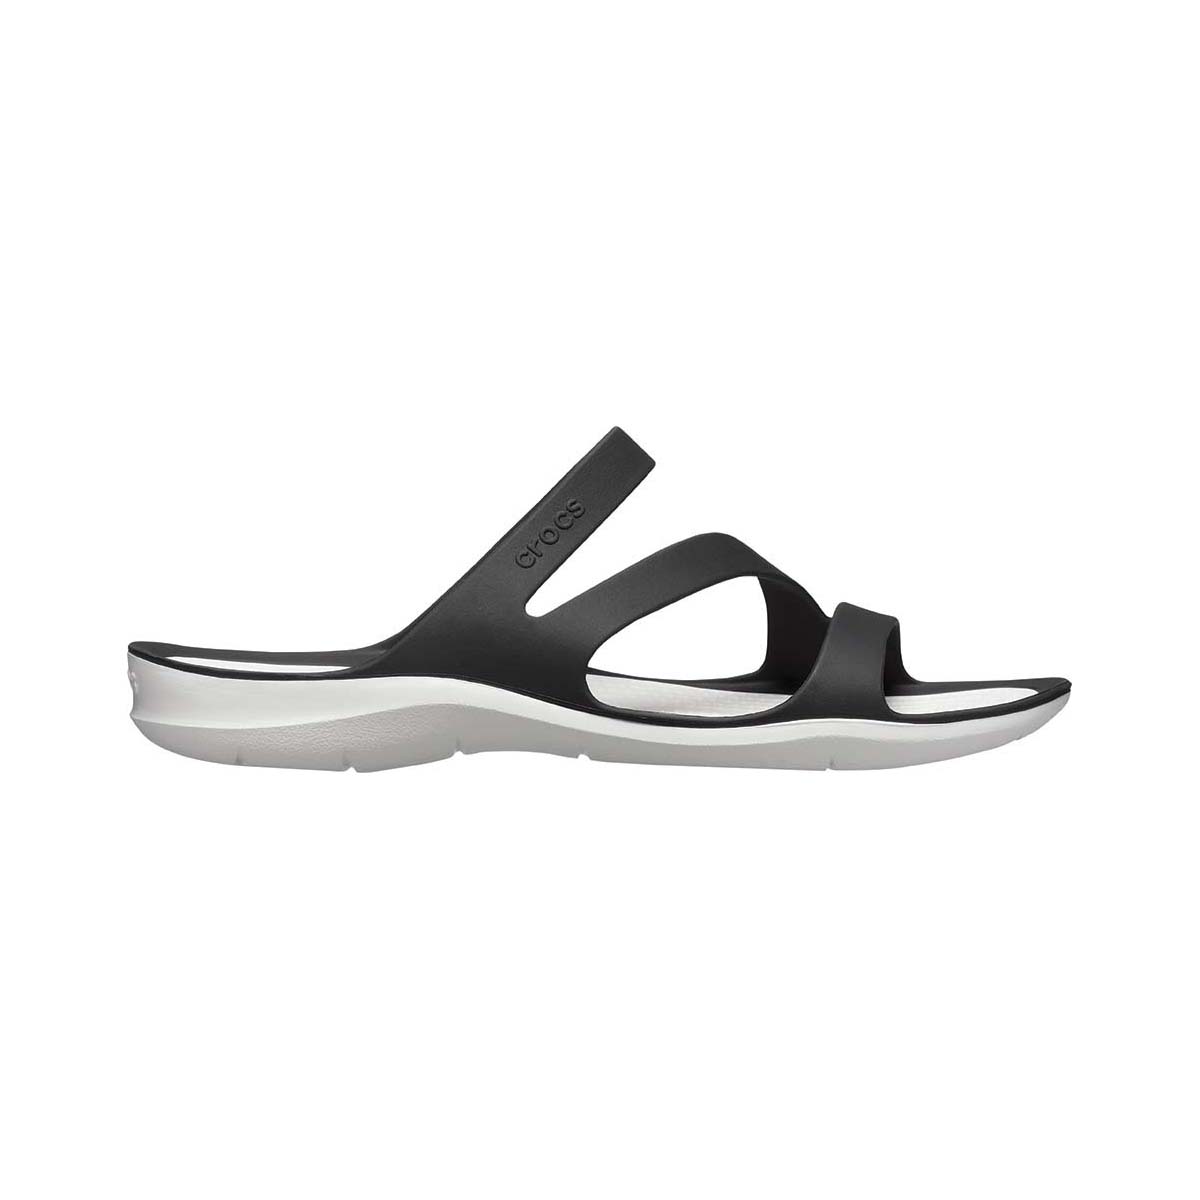 Crocs Women's Swiftwater Sandals W10